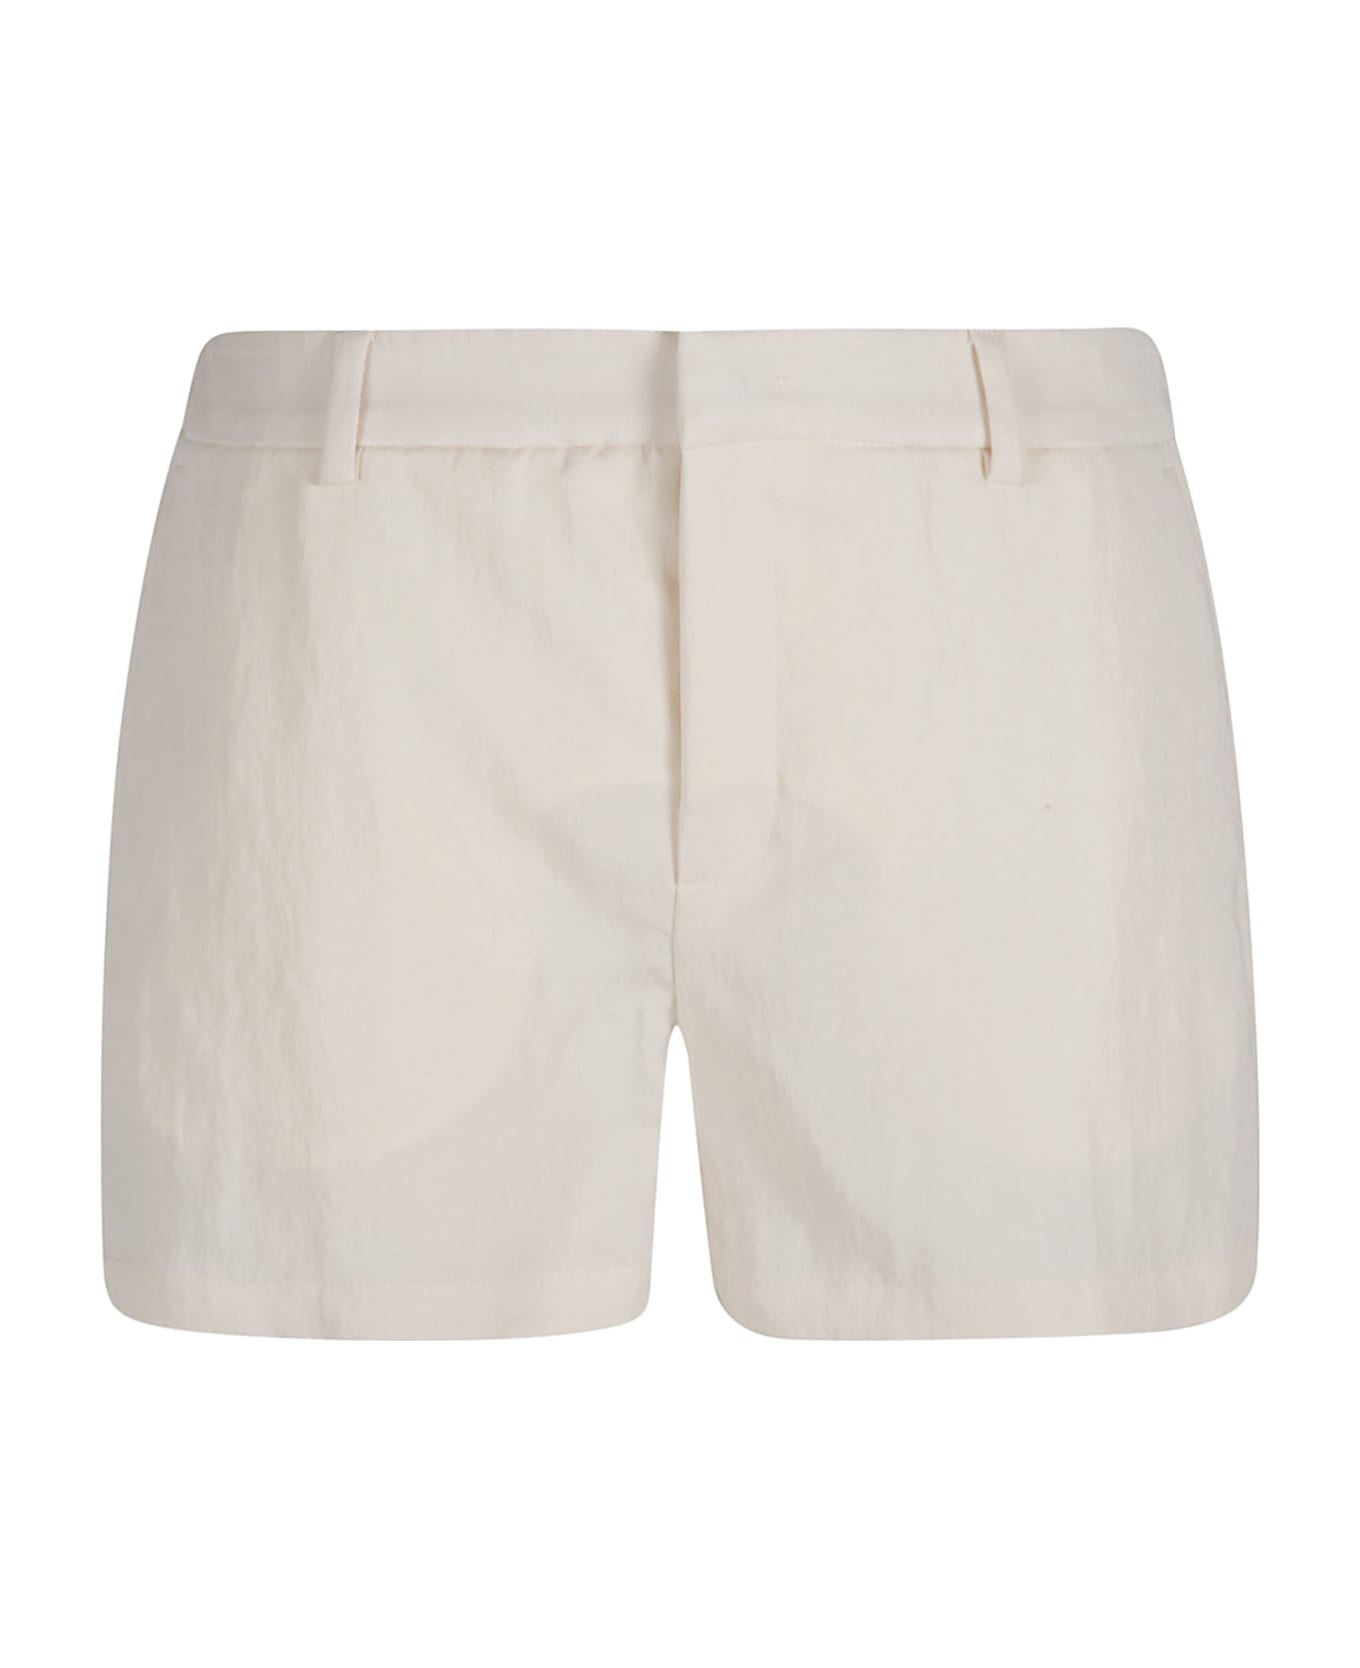 Blumarine Concealed Shorts - Cream